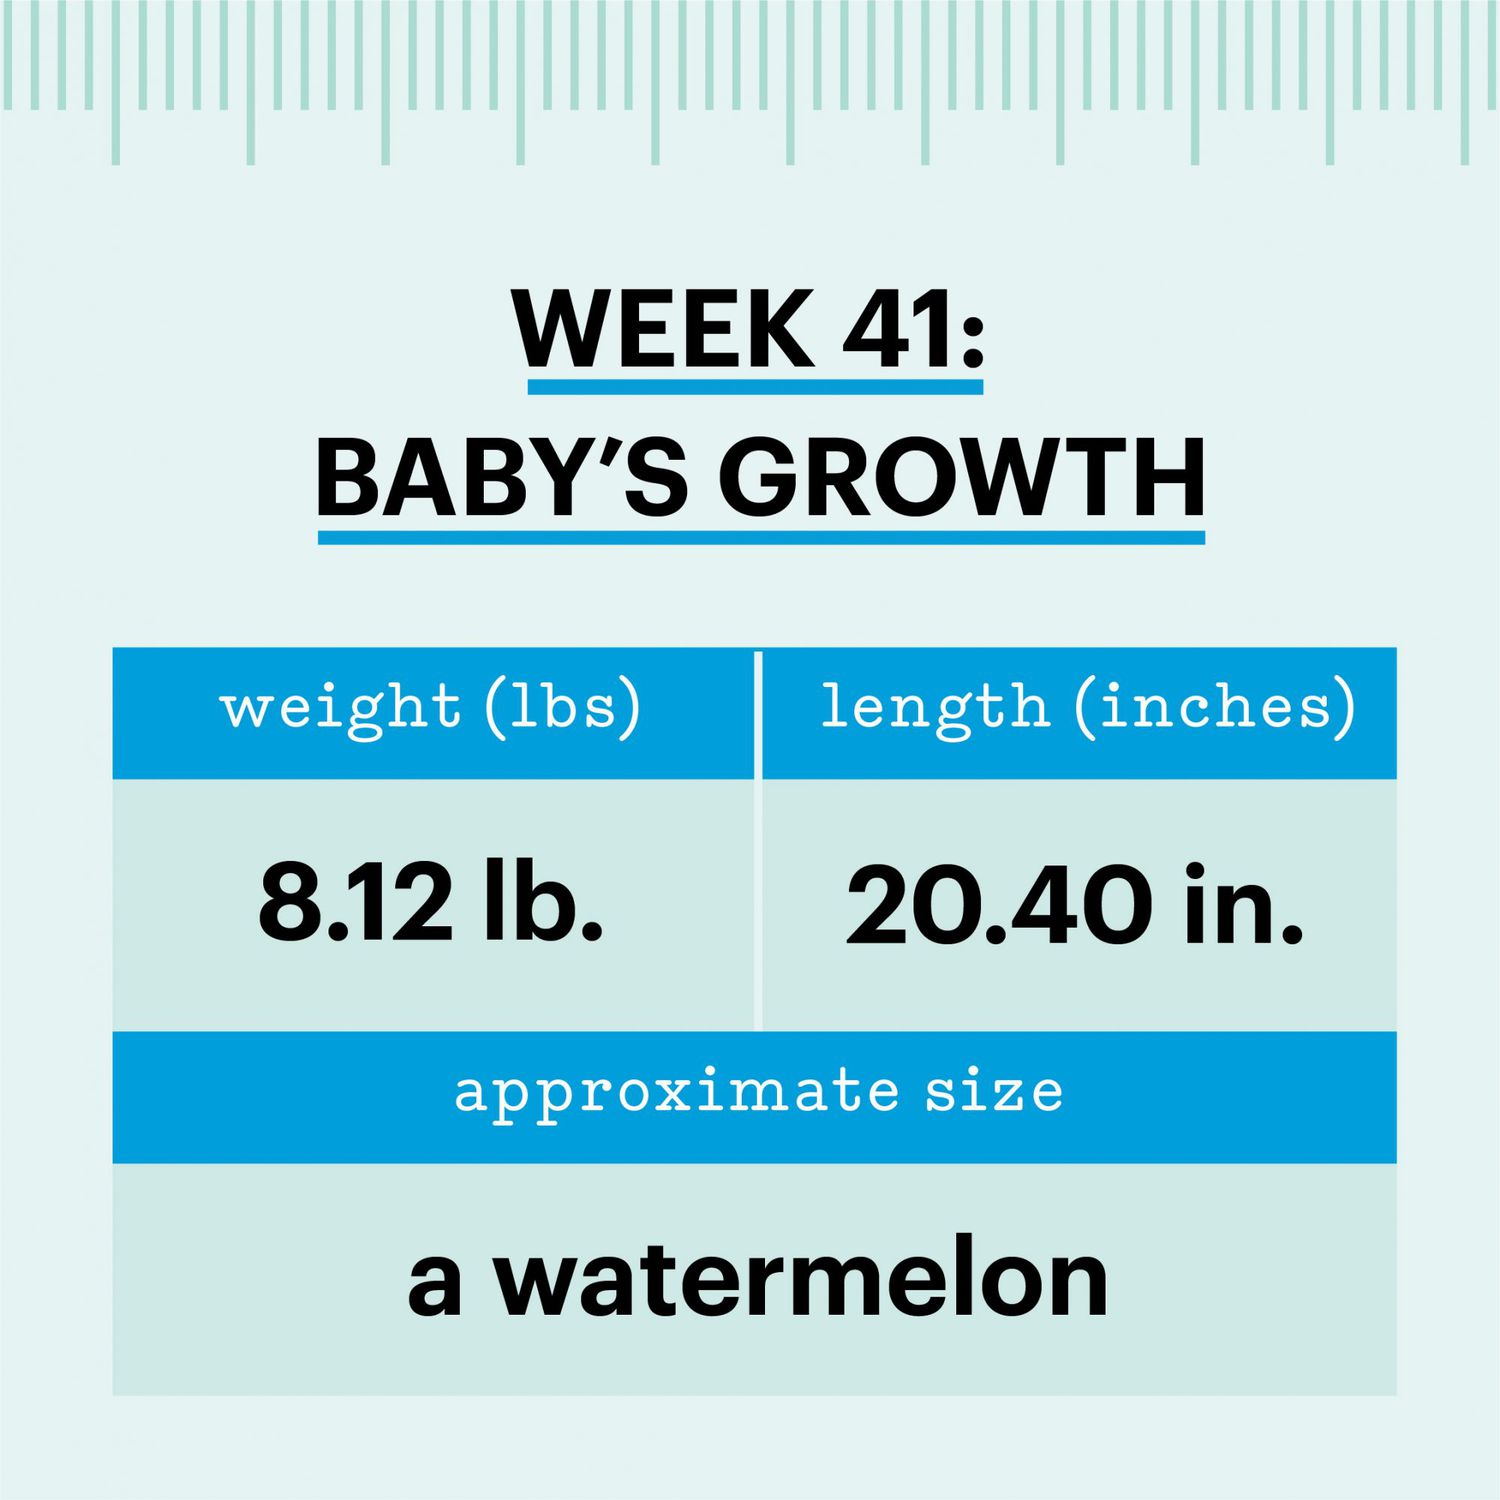 how big is baby week 41